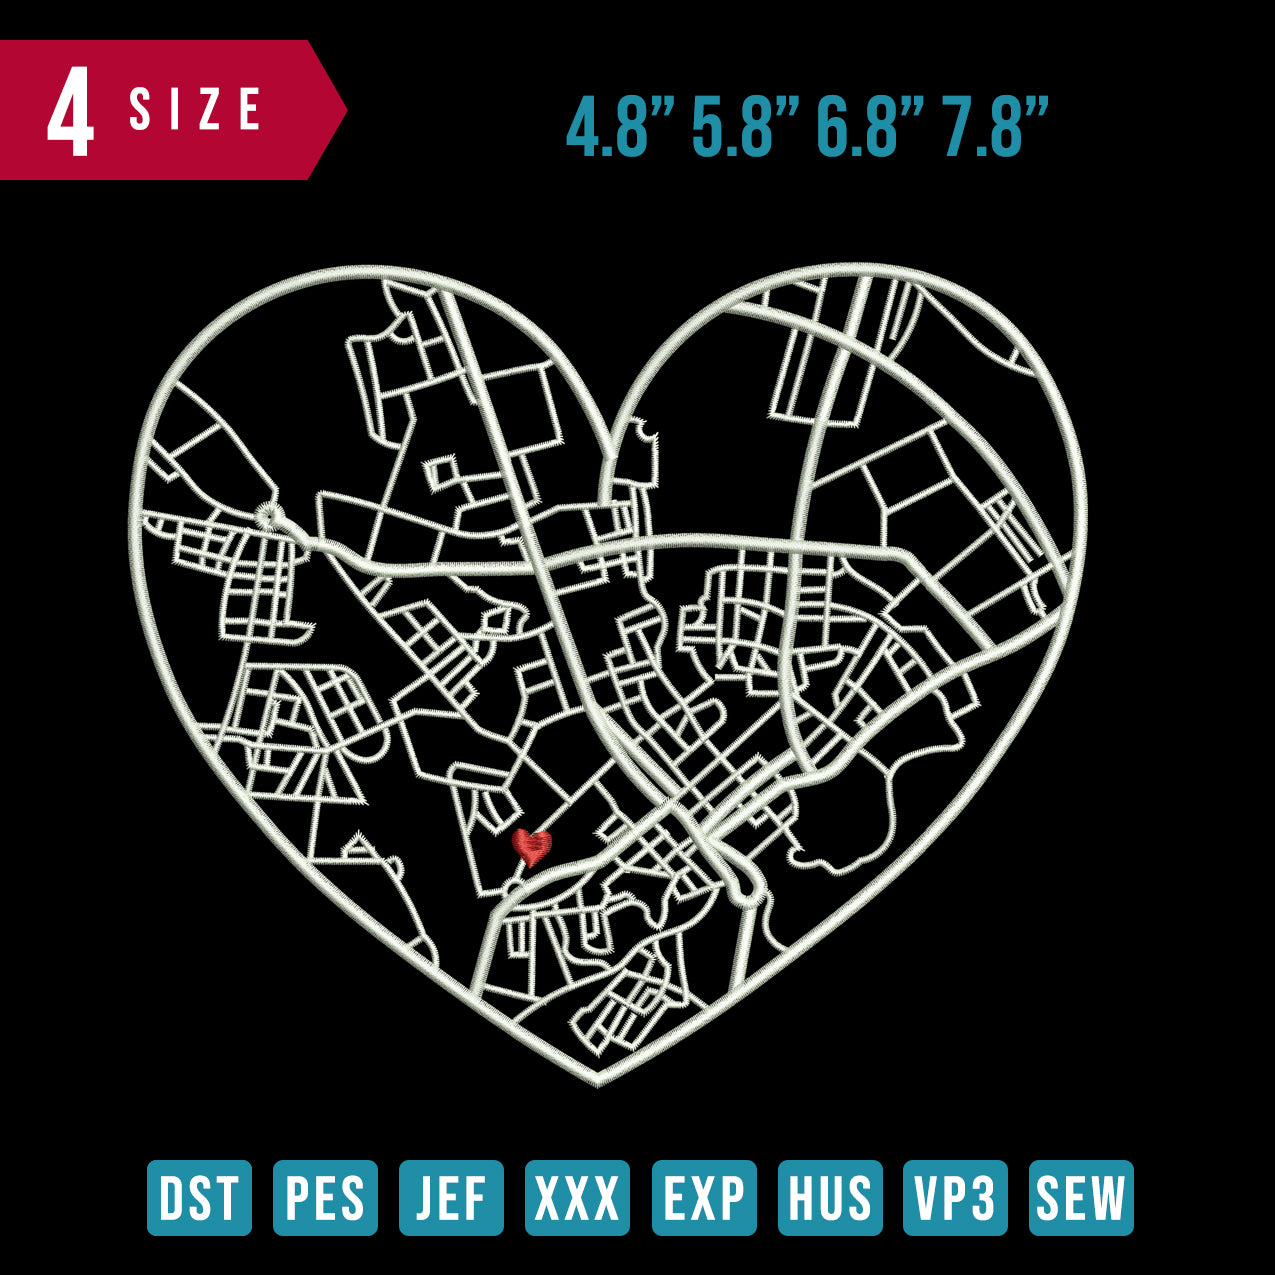 Love map